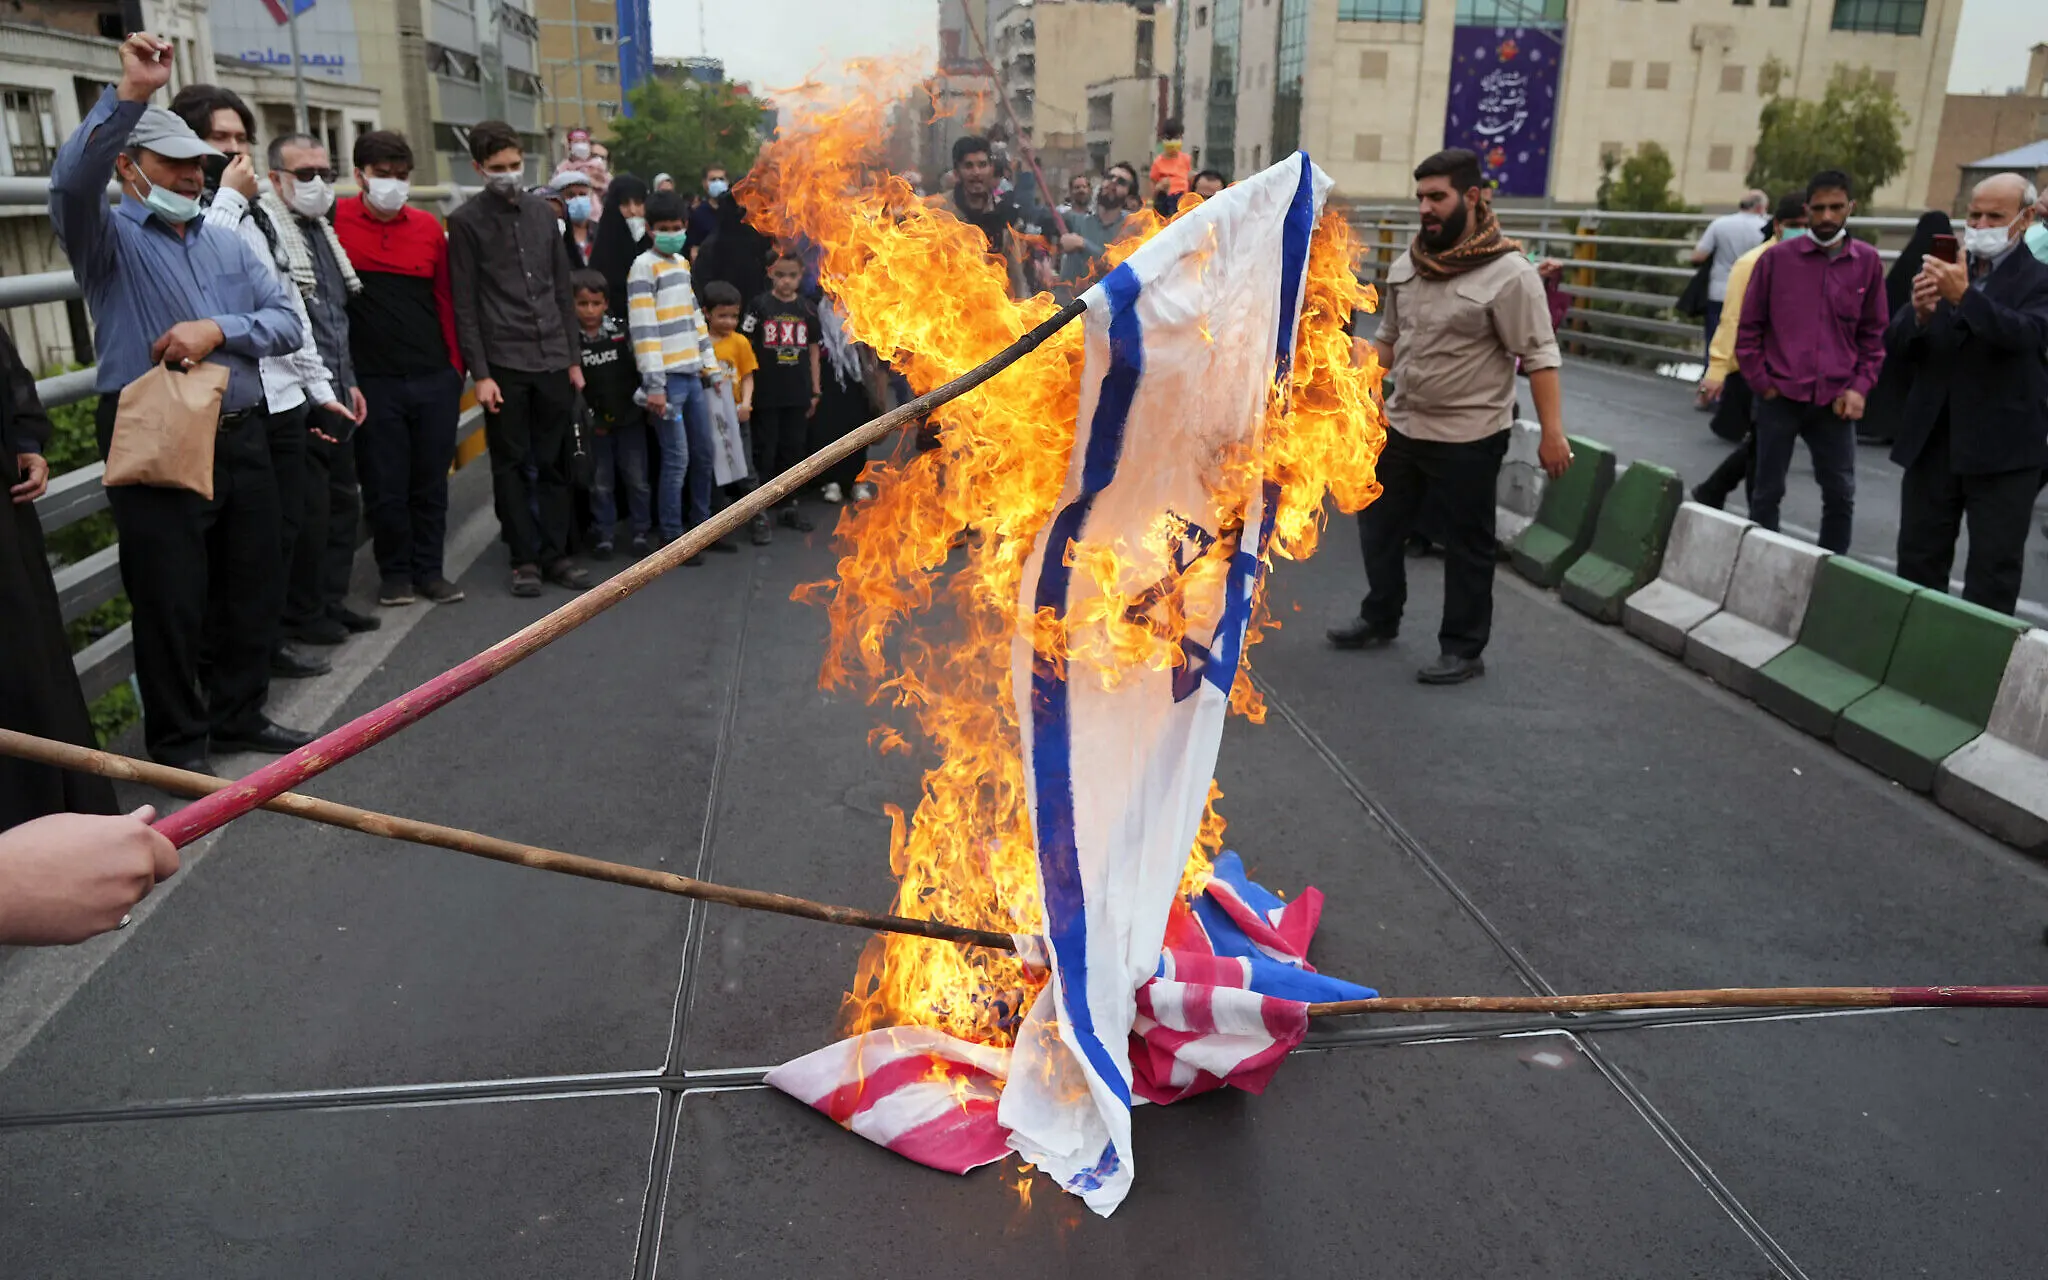 Iranians burn representations of Israeli, British and American flags during the annual Al-Quds Day demonstration in Tehran, Iran, April 29, 2022. (AP Photo/Vahid Salemi)